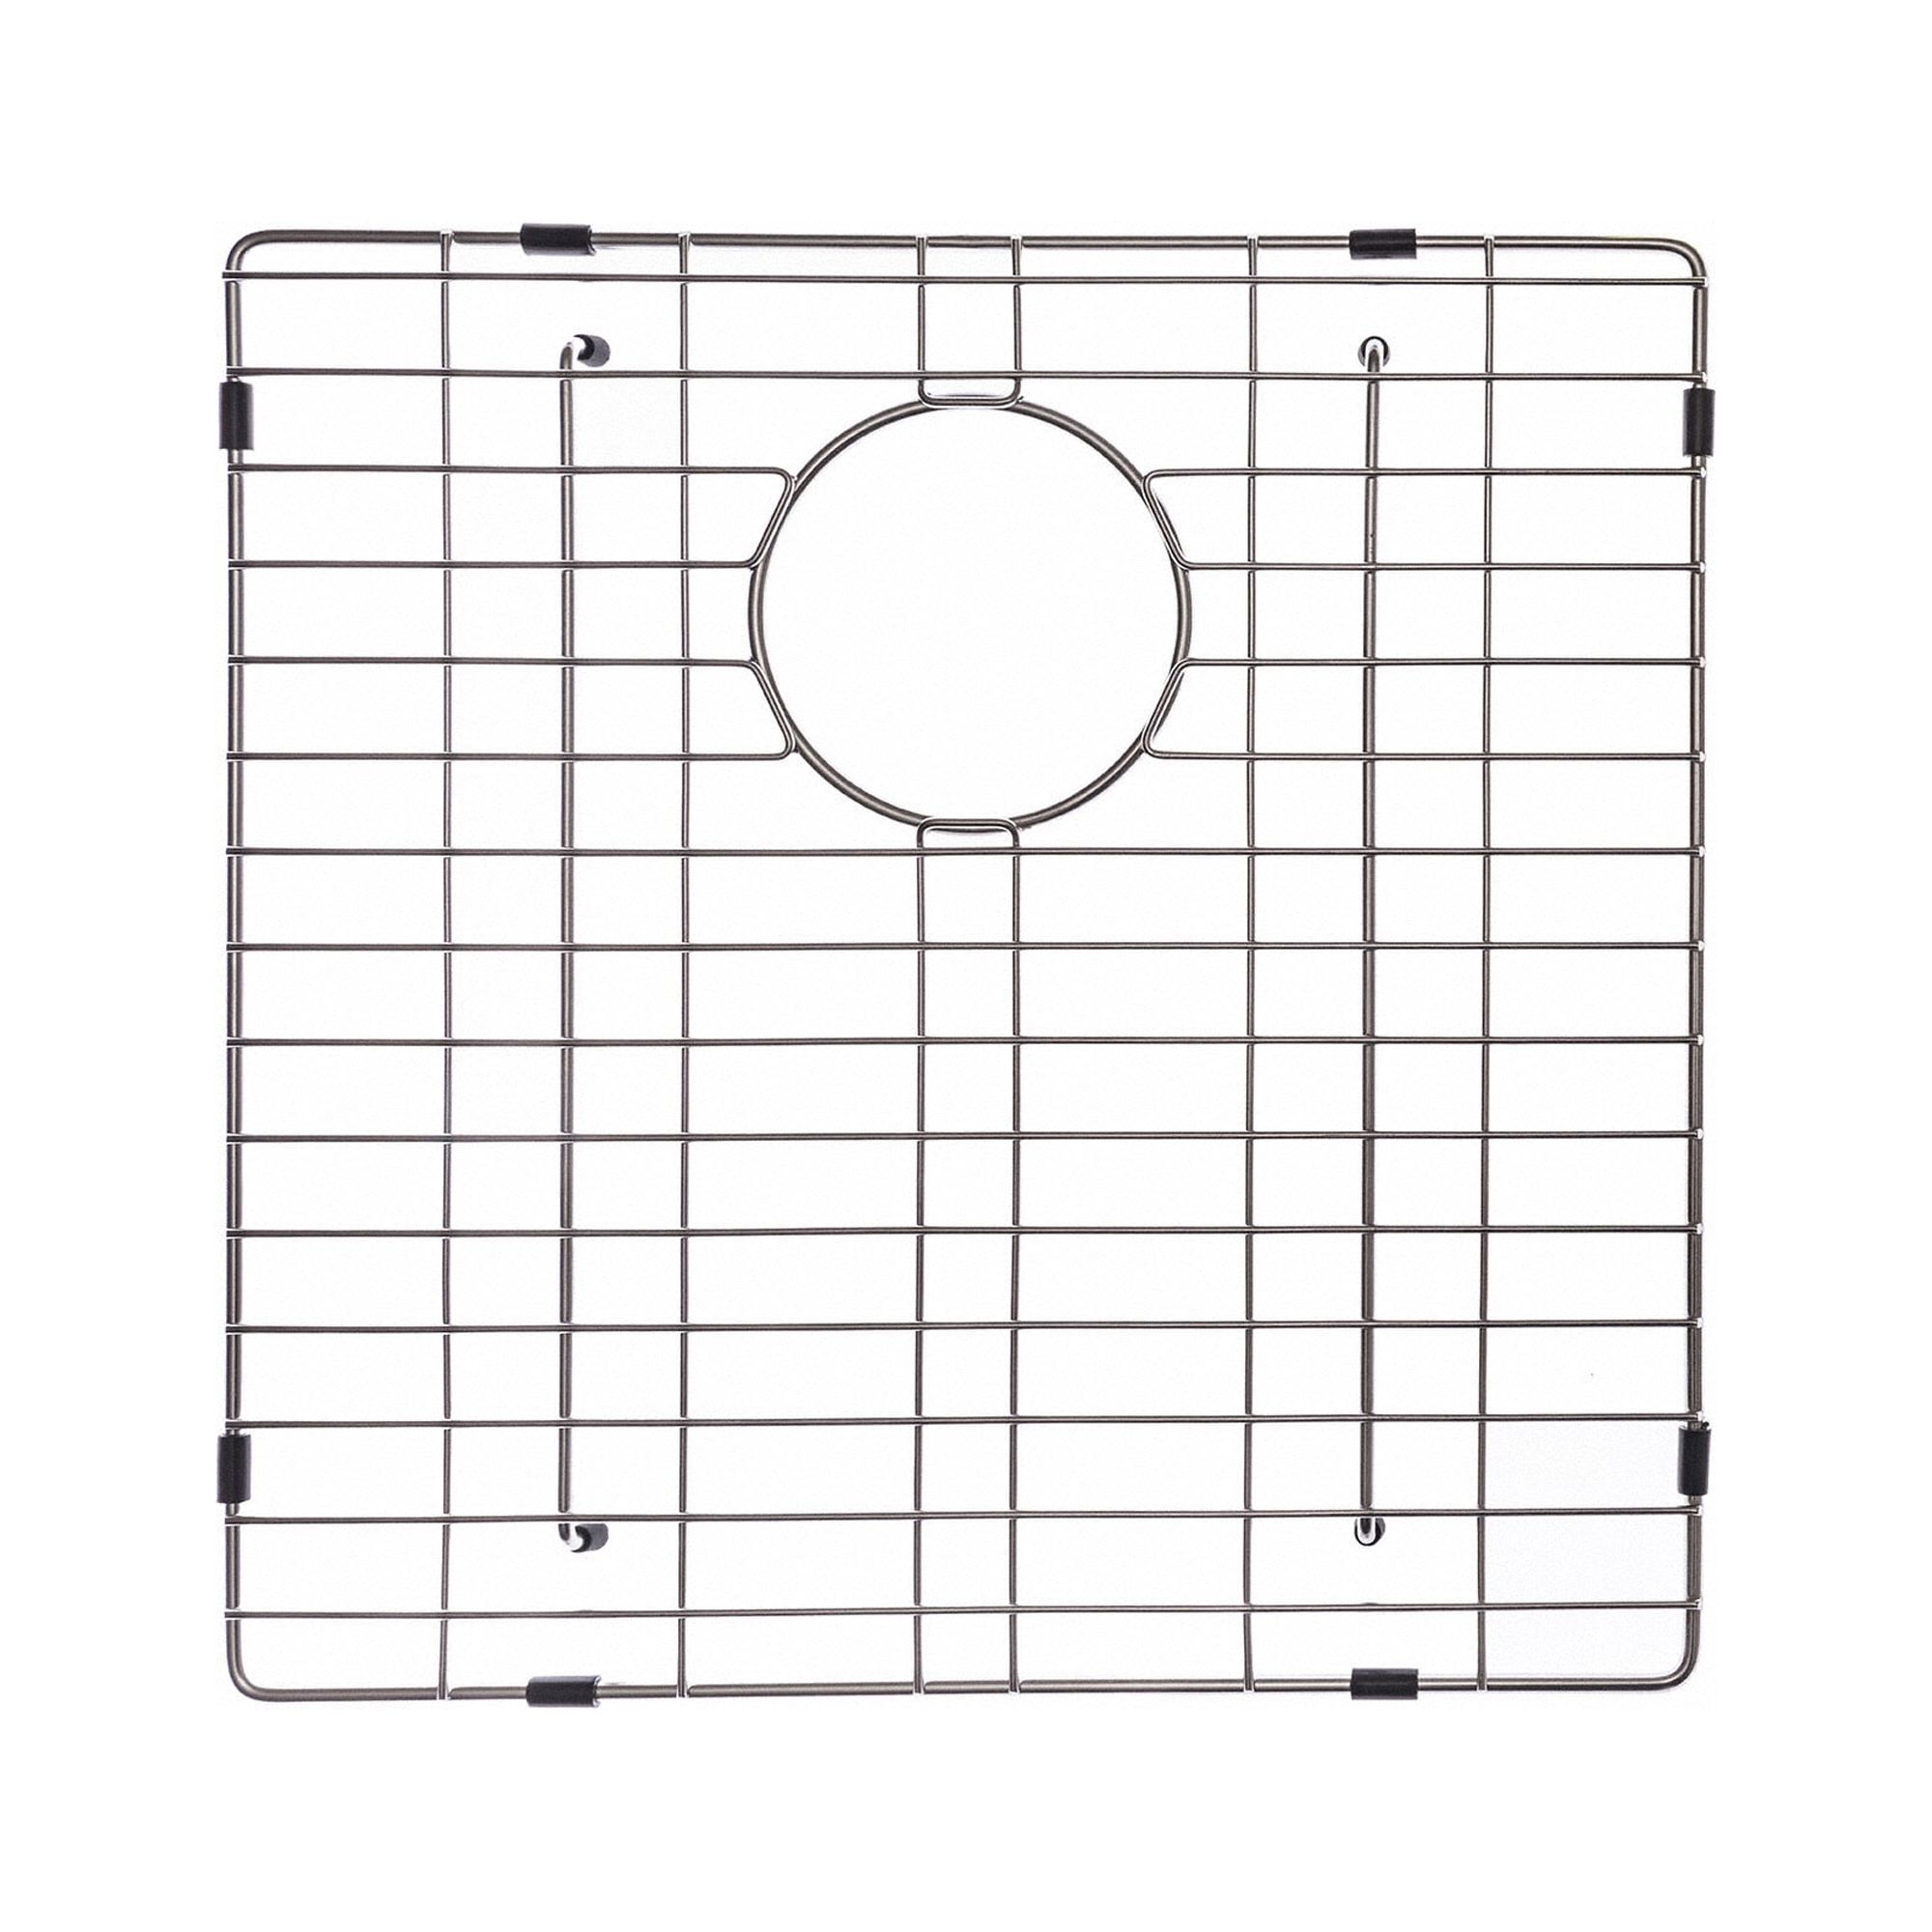 KRAUS KBG-203-36-1 Stainless Steel Bottom Grid for KHF203-36 Left (Large) Bowl 36? Farmhouse Kitchen Sink, 18 11/16? x 15 1/2? x 1 3/8? - image 1 of 2